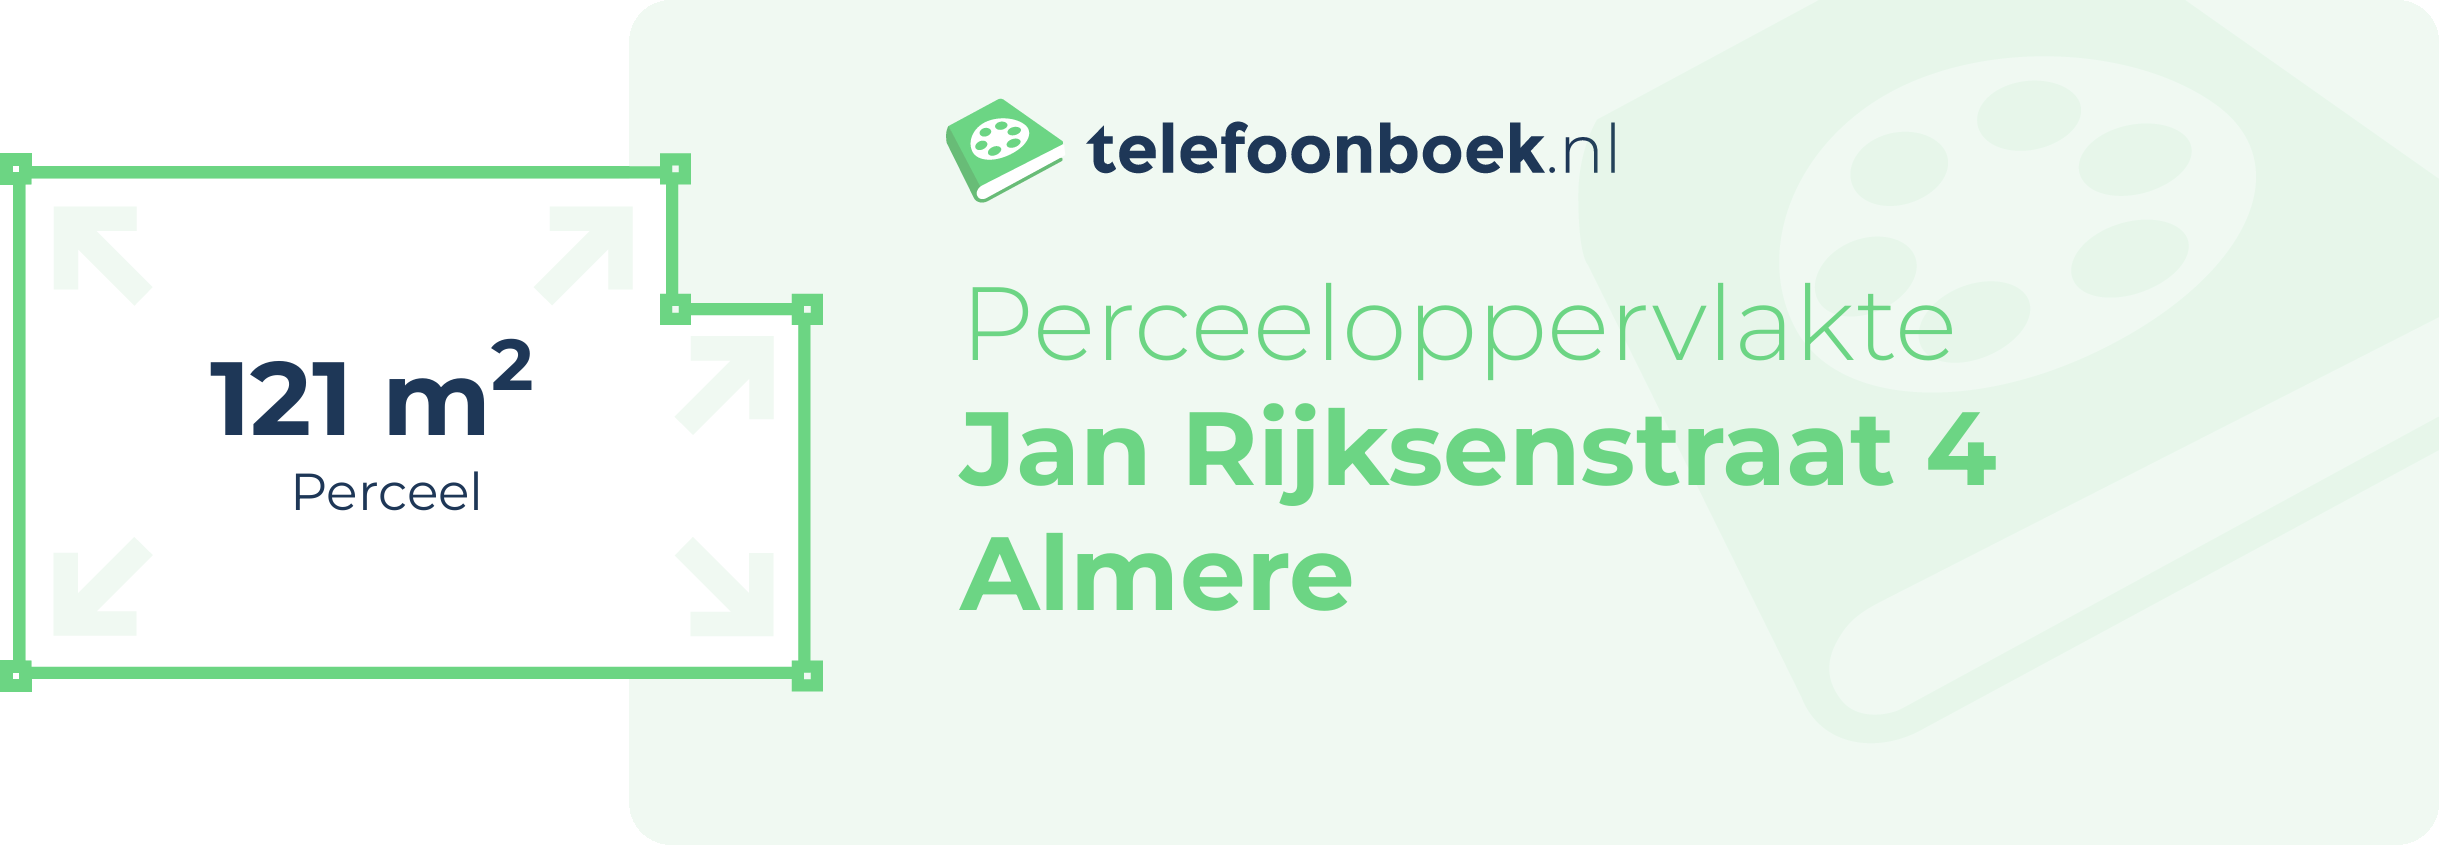 Perceeloppervlakte Jan Rijksenstraat 4 Almere